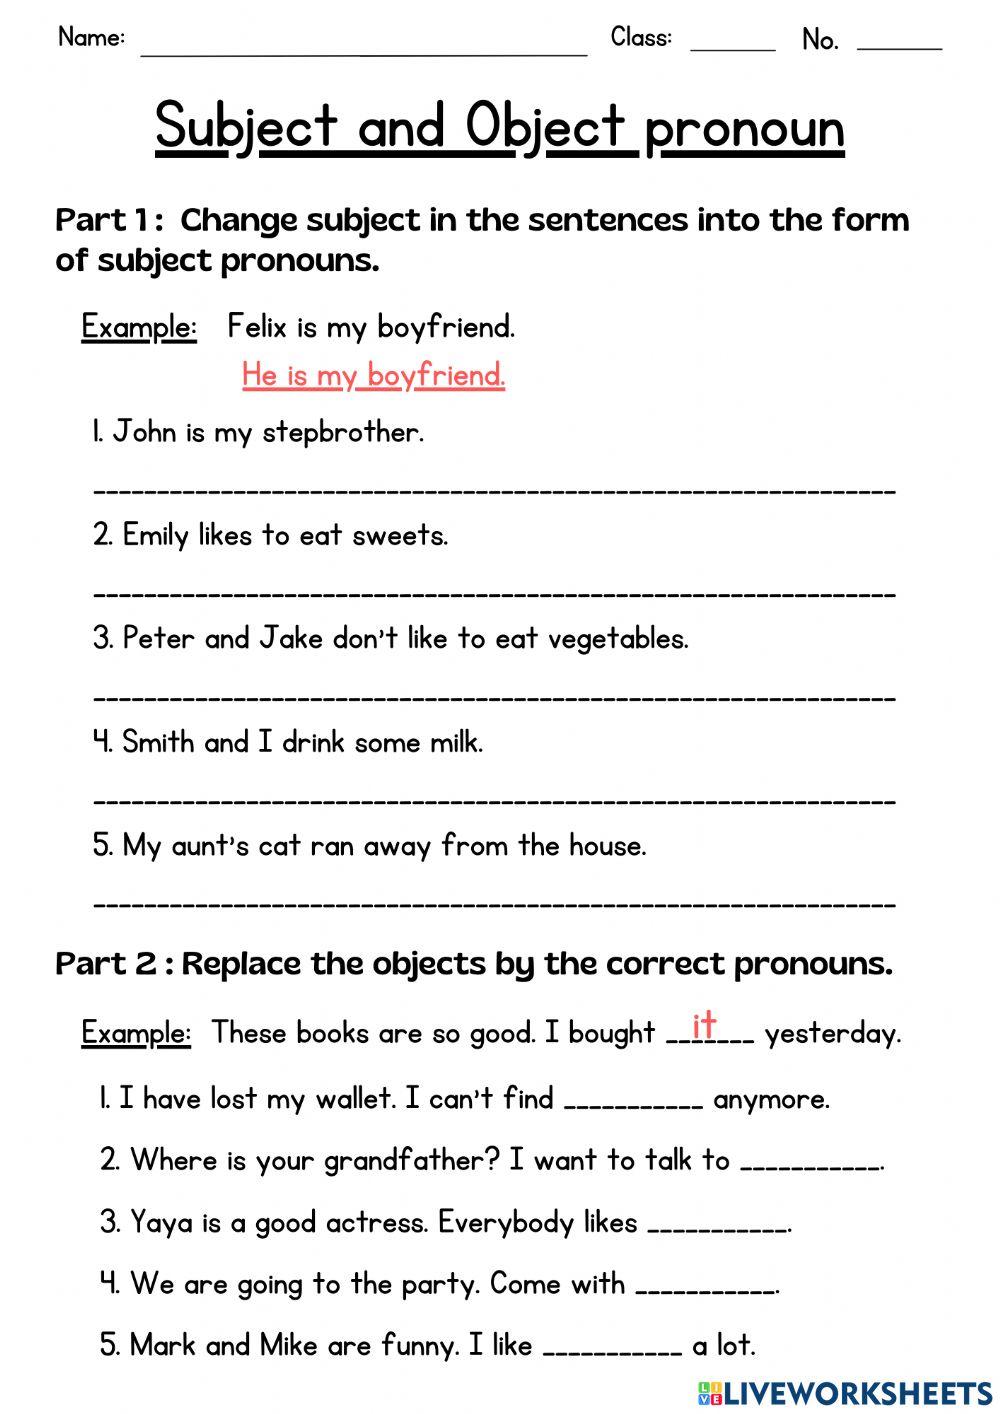 English3 - Worksheet1 - Subject and Object pronoun